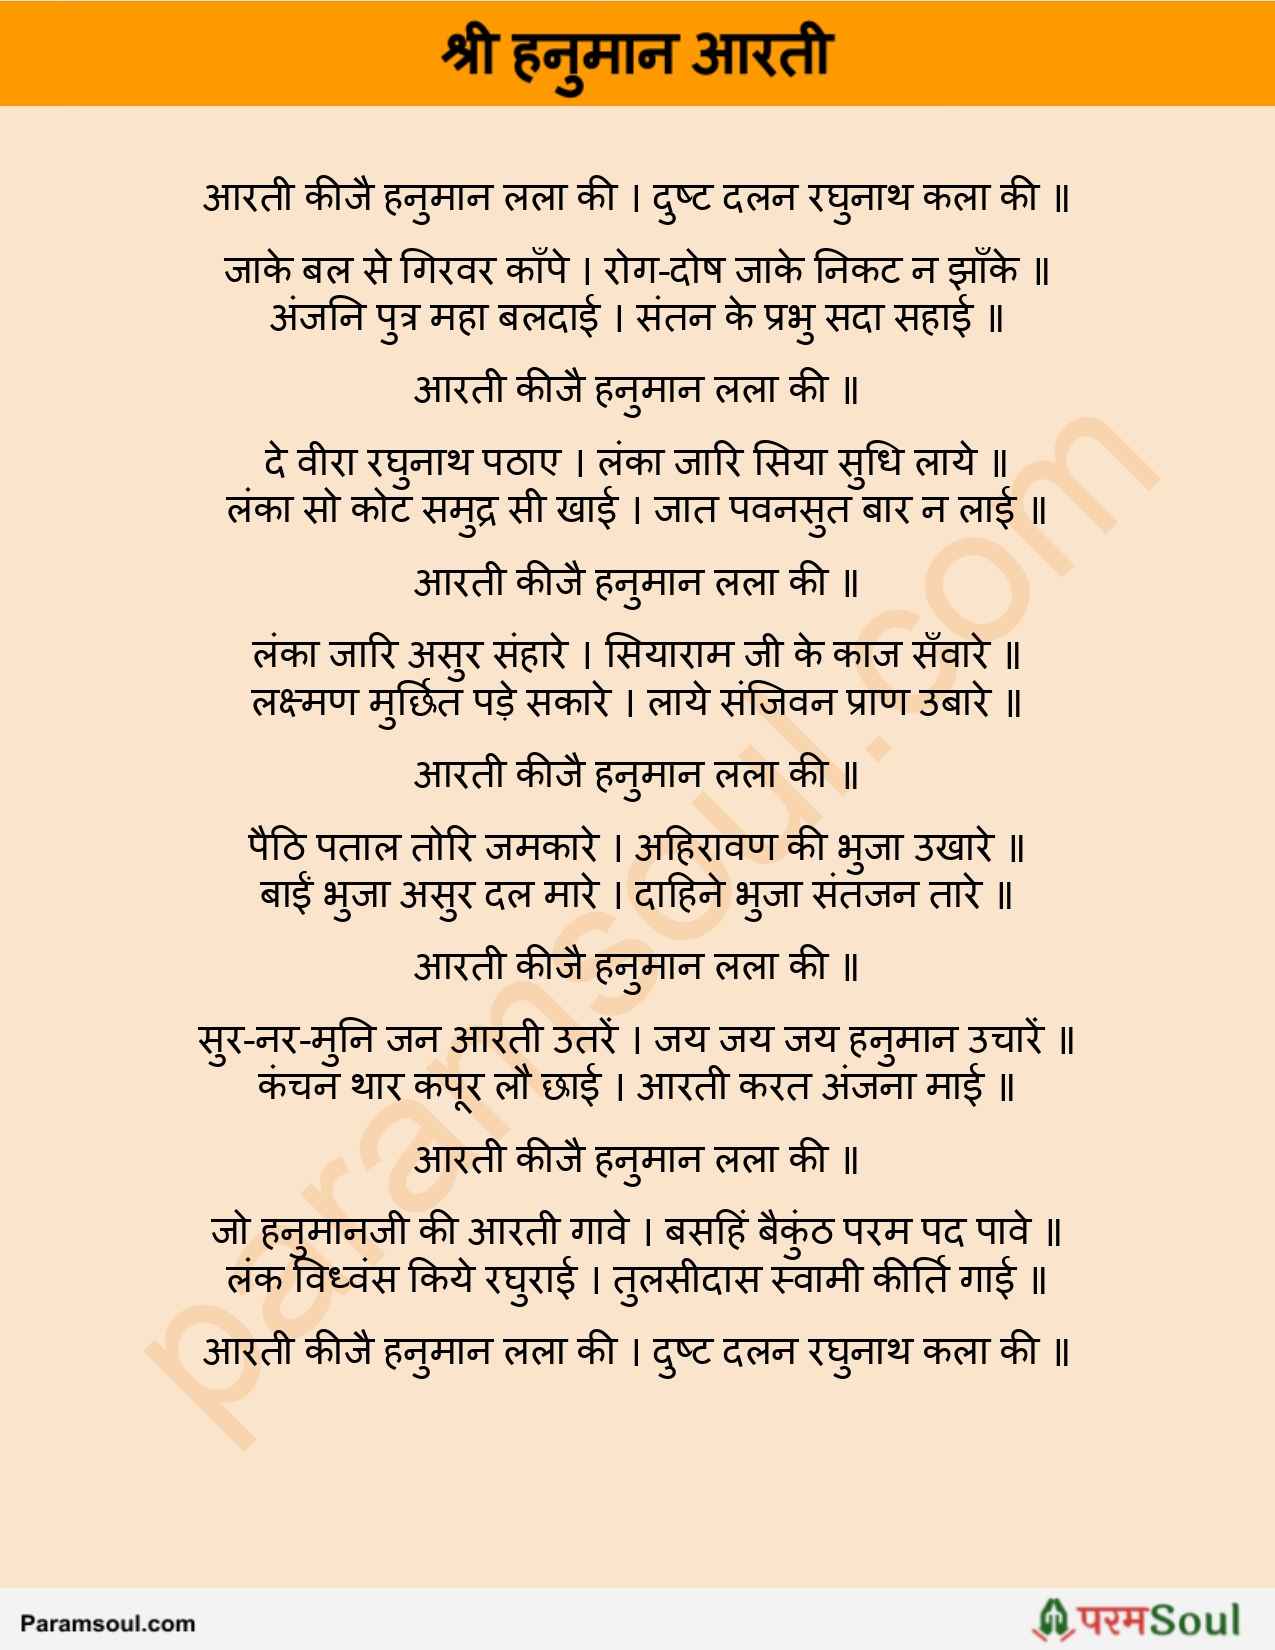 Hanuman ji ki Aarti Lyrics